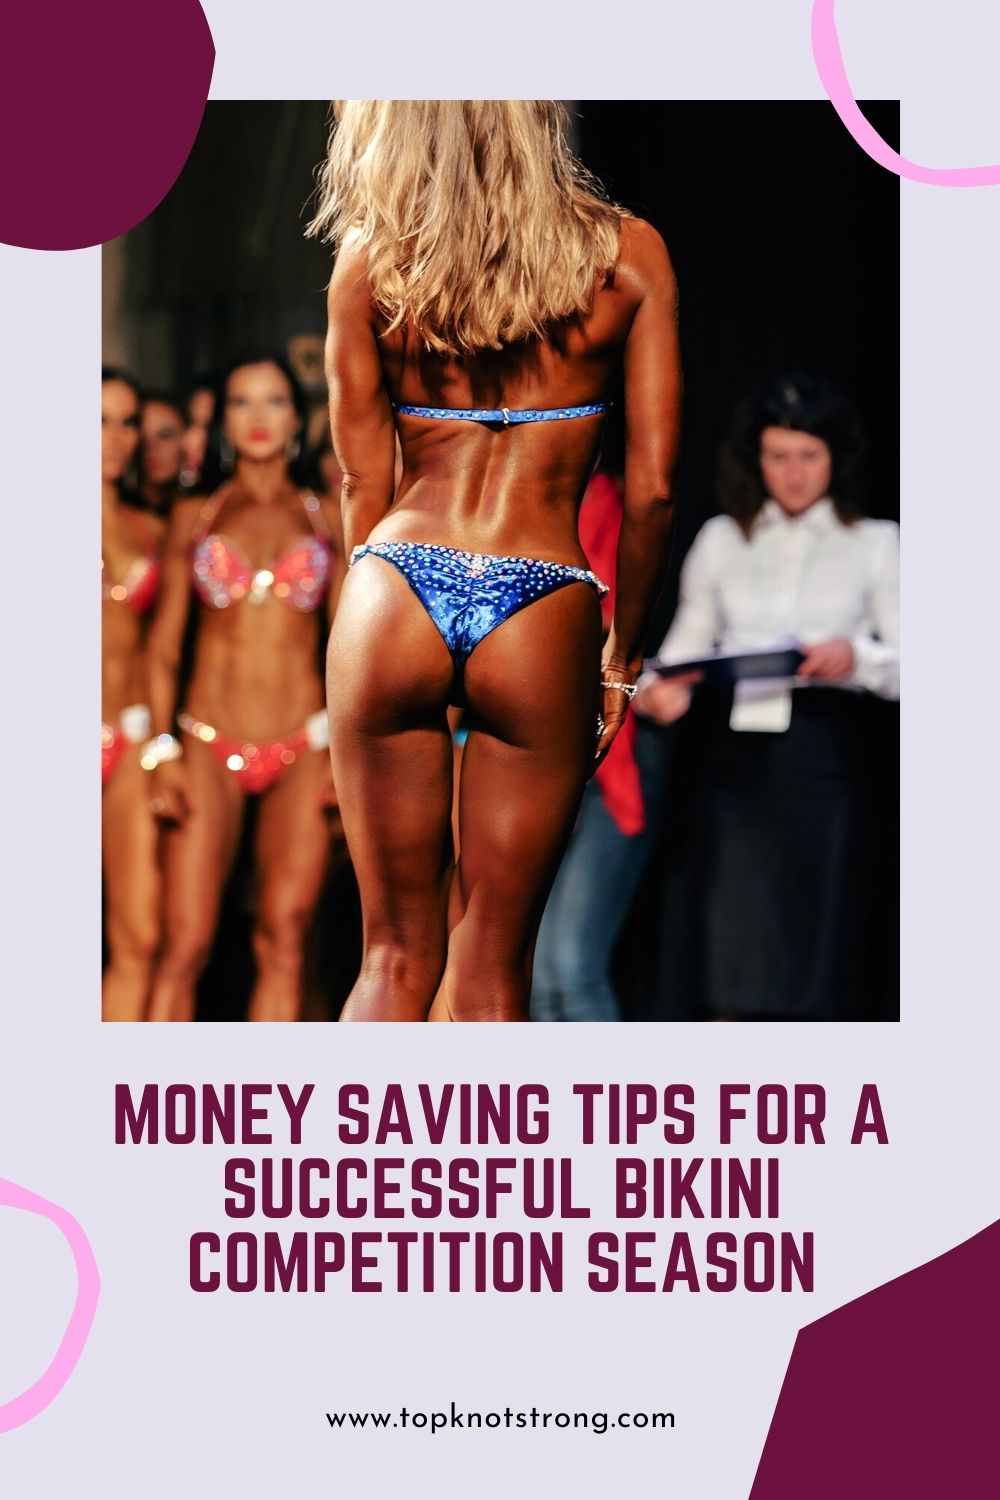 Money saving tops for a bikini competition